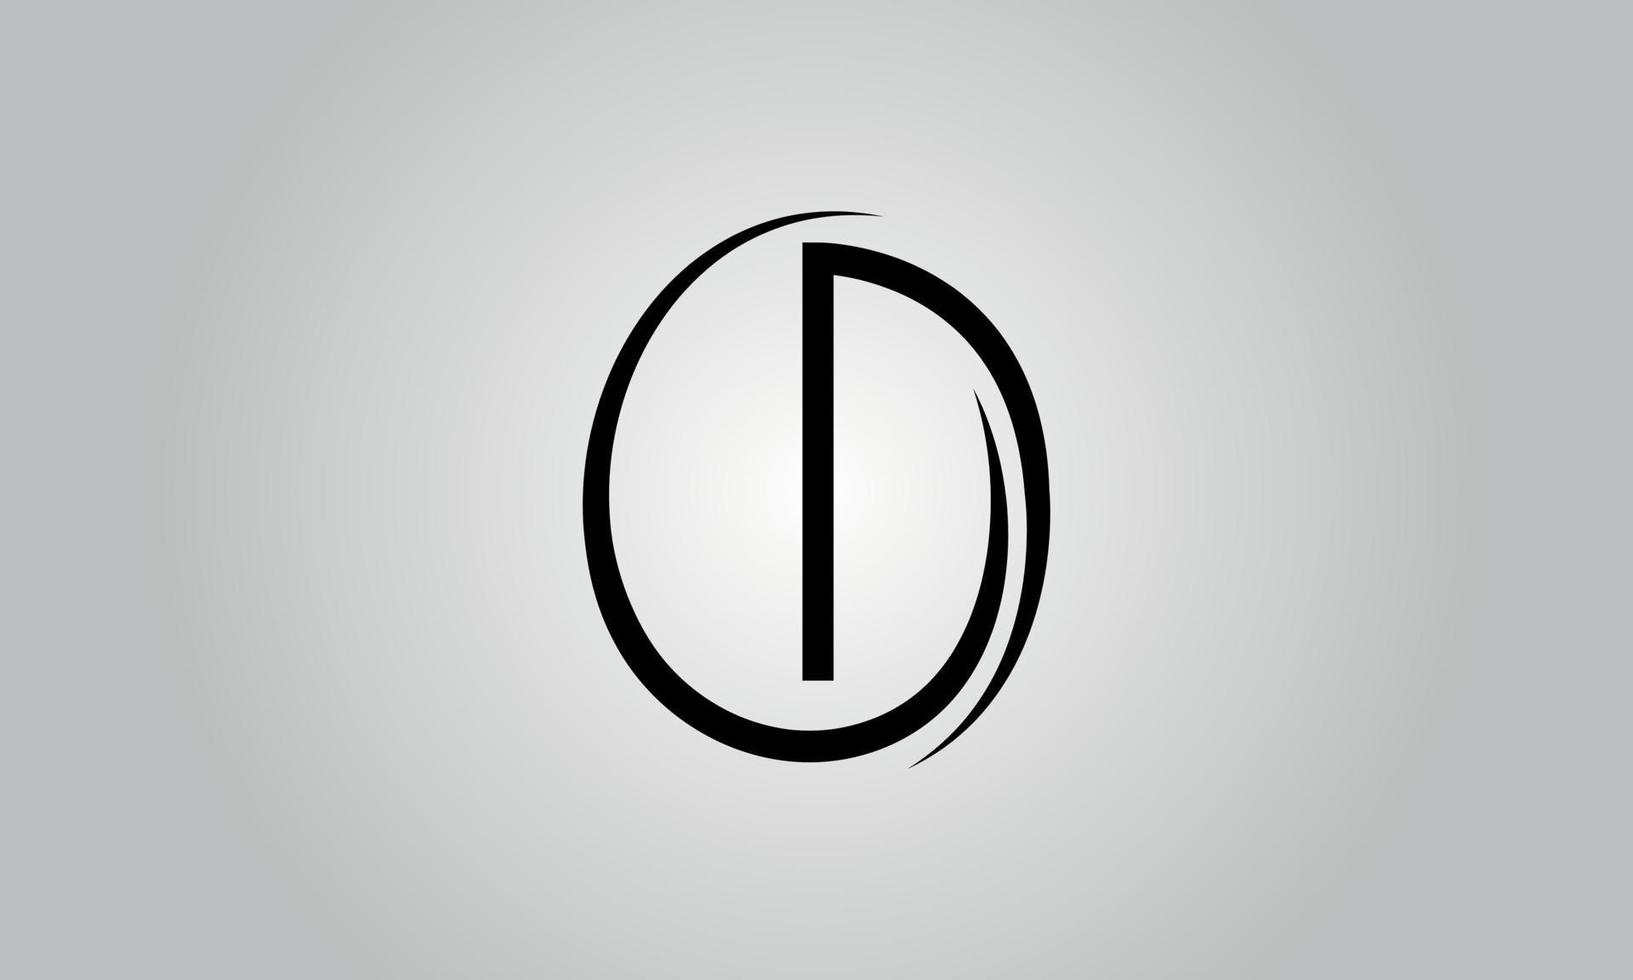 modelo grátis de logotipo de vetor letra d vetor grátis